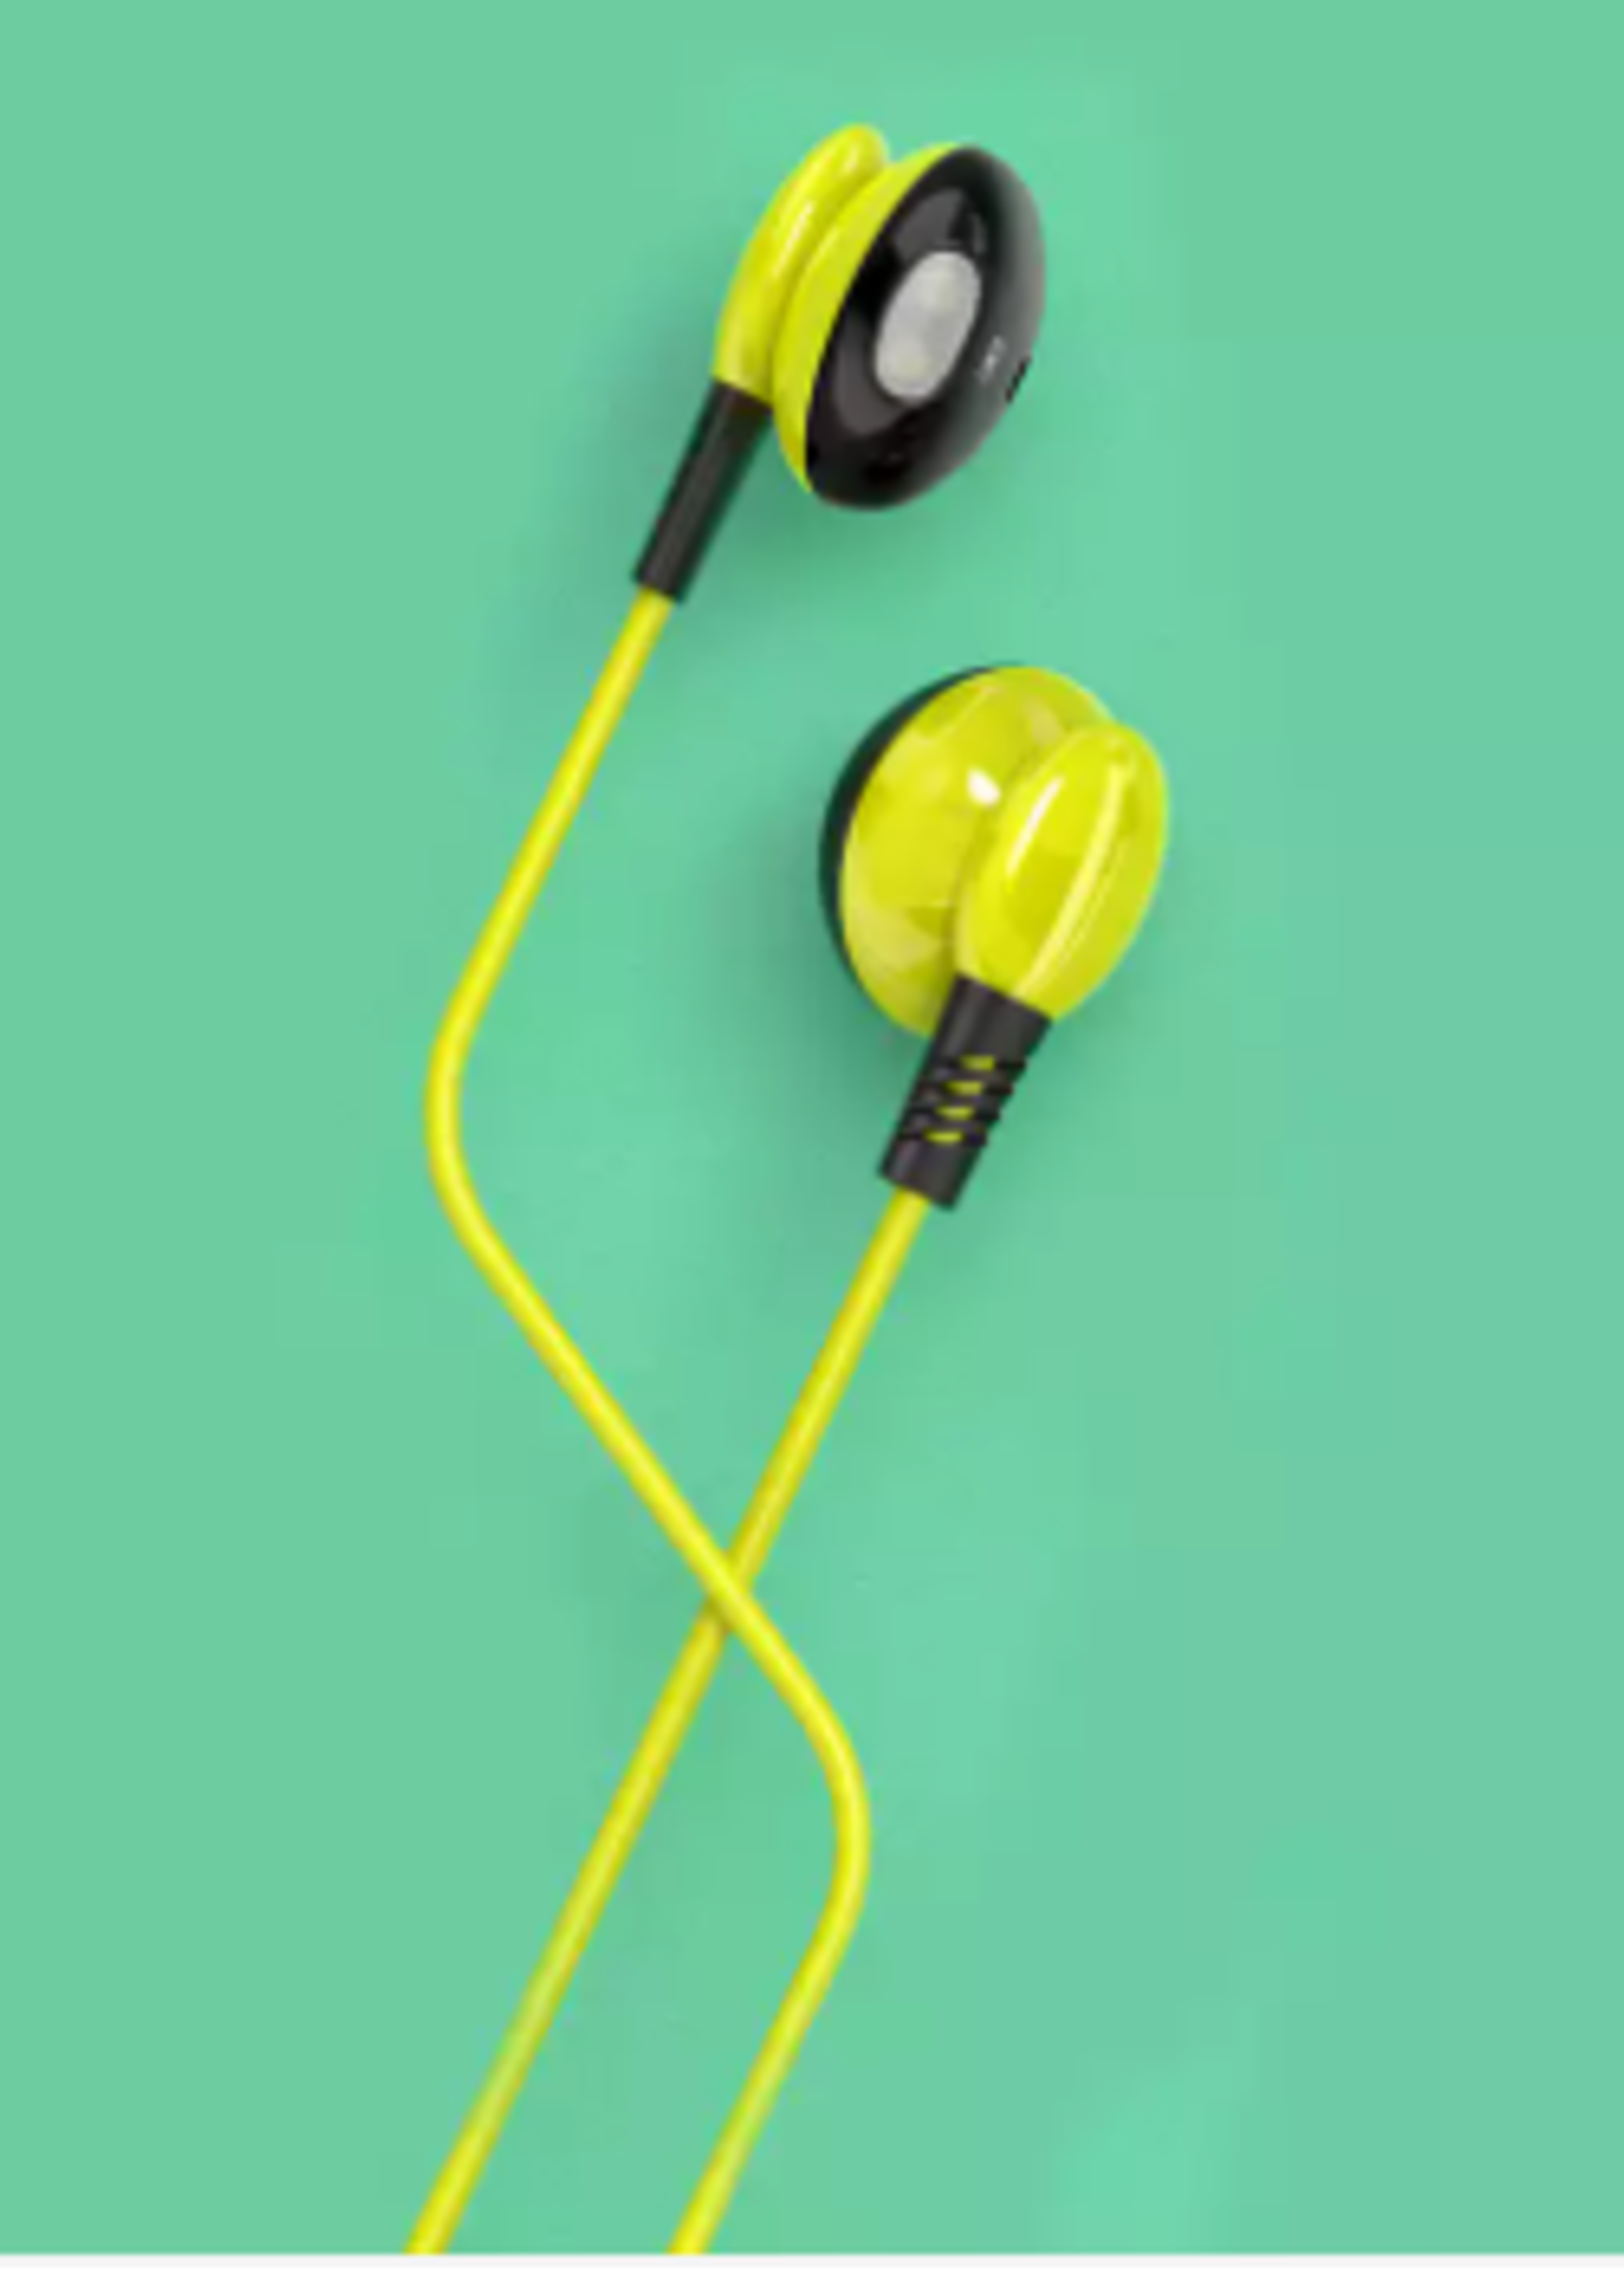 KSC 379 Stereo Sound Earphone (yellow)